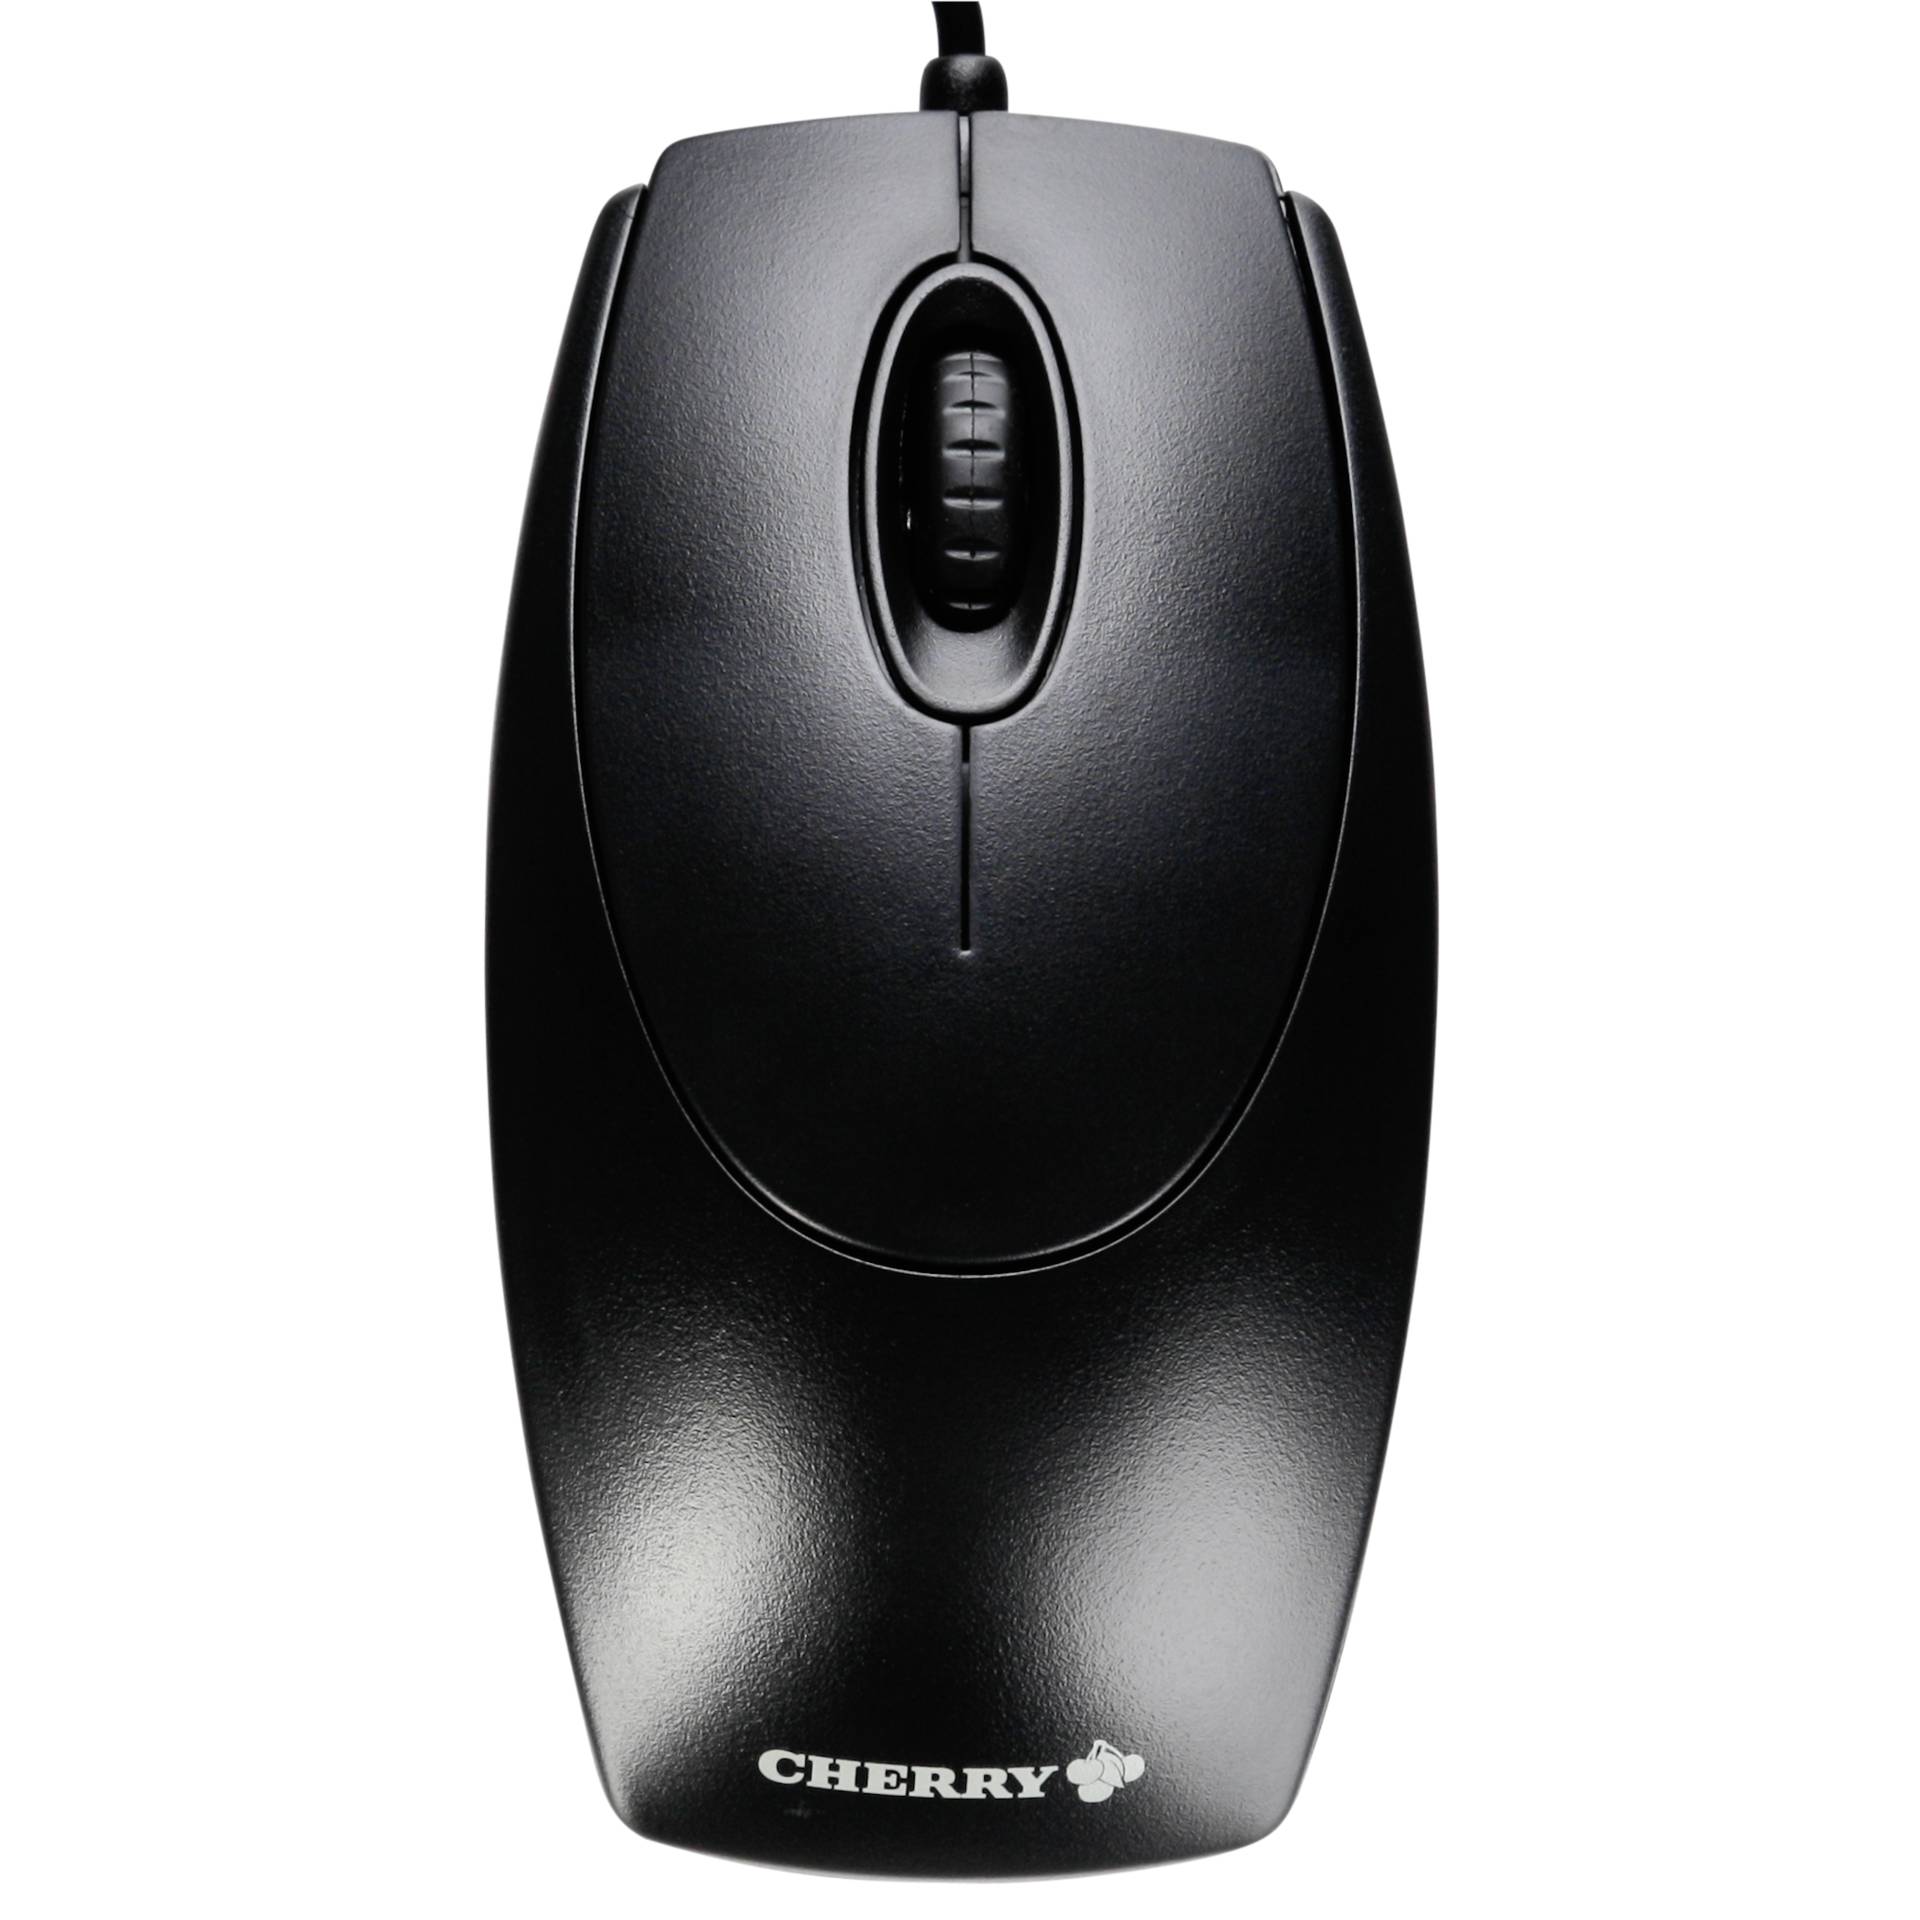 Cherry M-5450 Wheel Optical schwarz PS/ 2 & USB Maus 